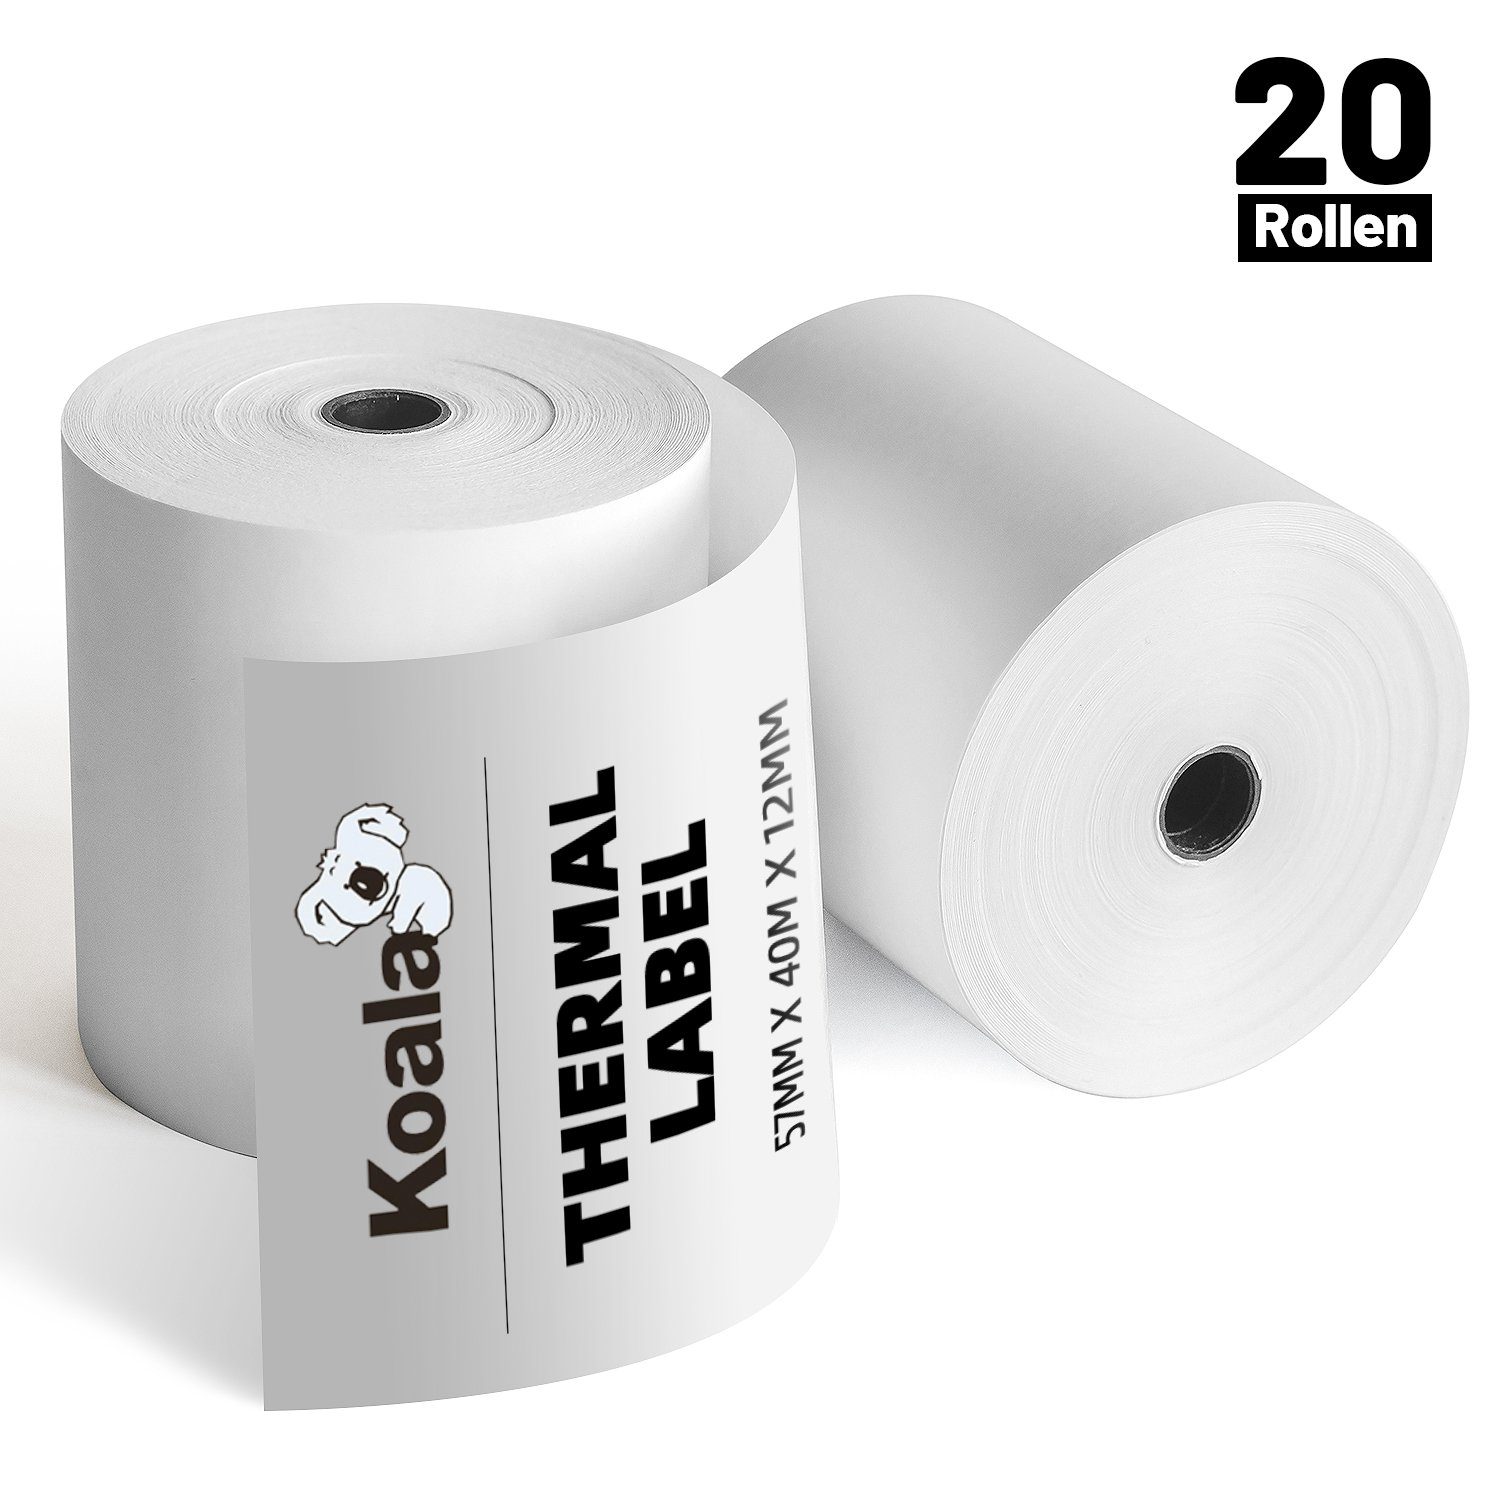 Etikettenpapier für Bonrolle 57 Drucker x Rollen Koala Thermopapier 20 mm 40 Kassen,